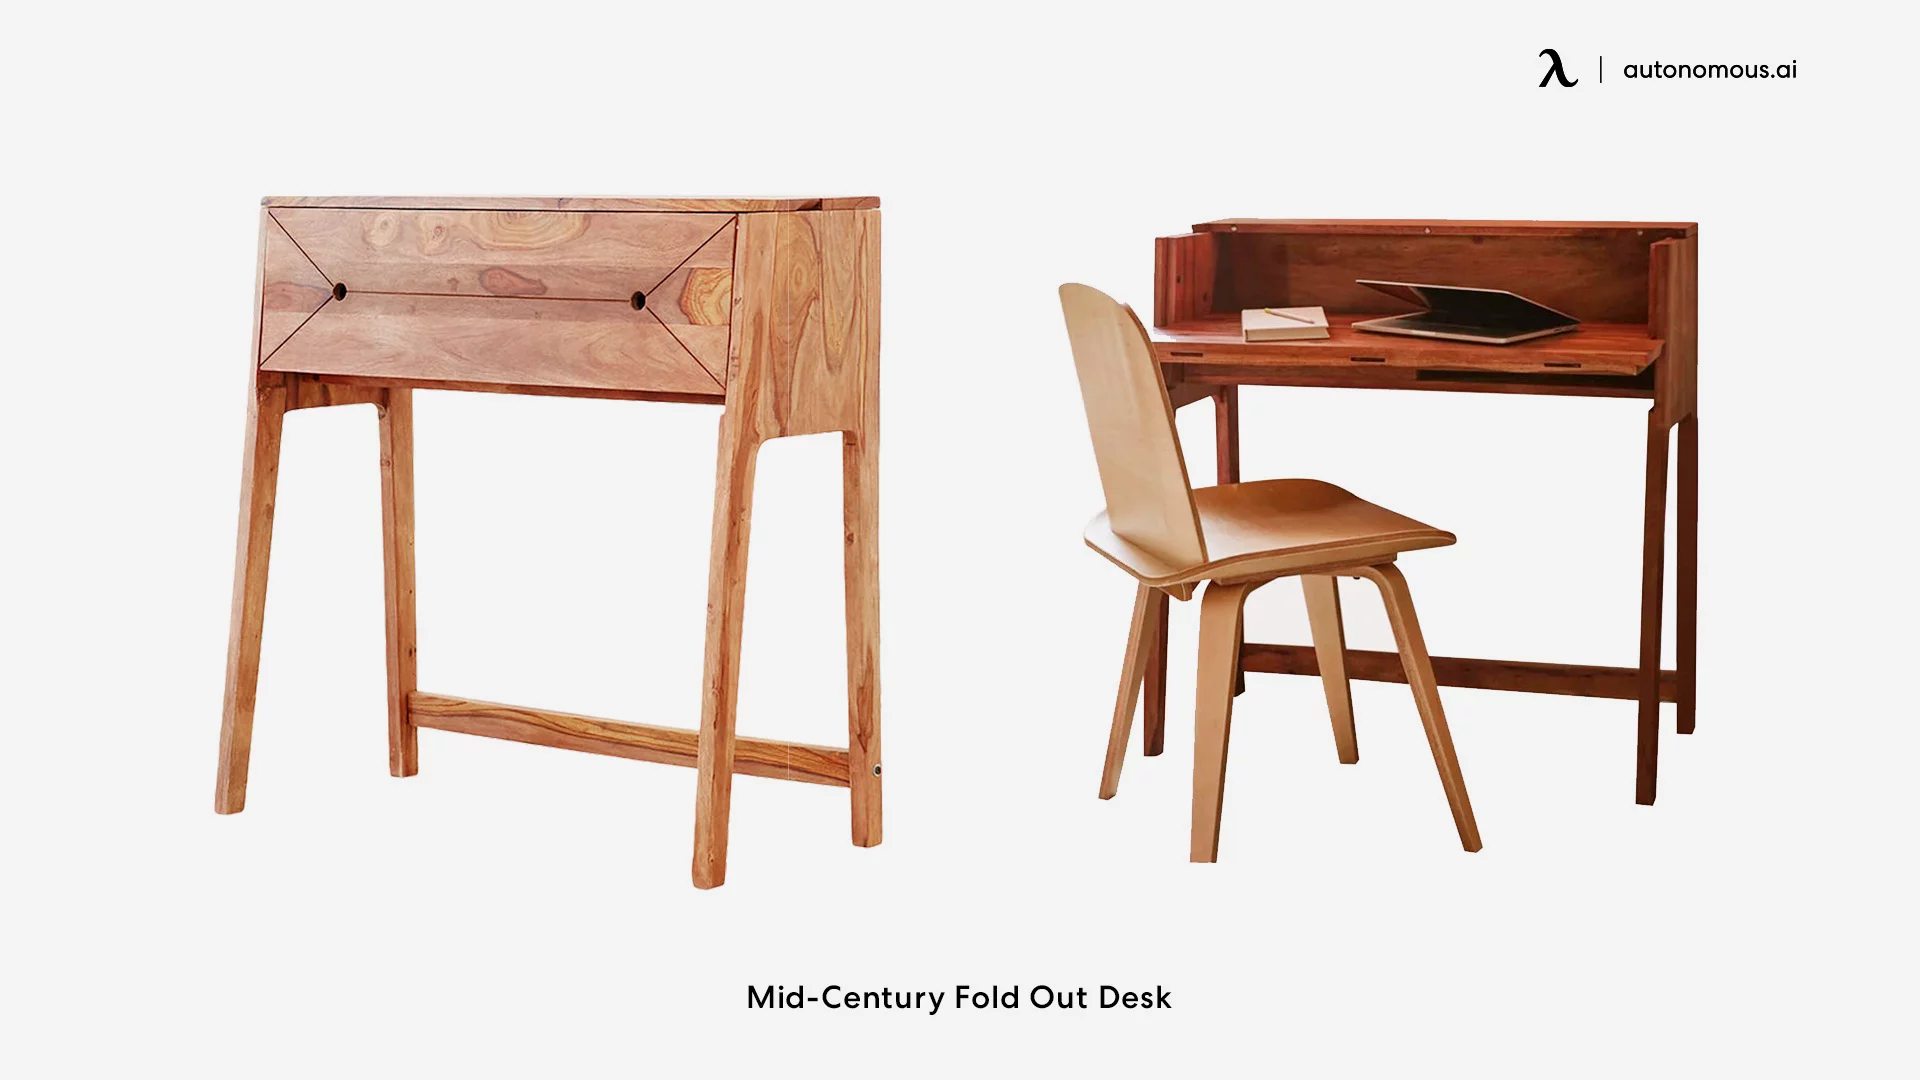 Mid-century Fold Out Desk living room desk